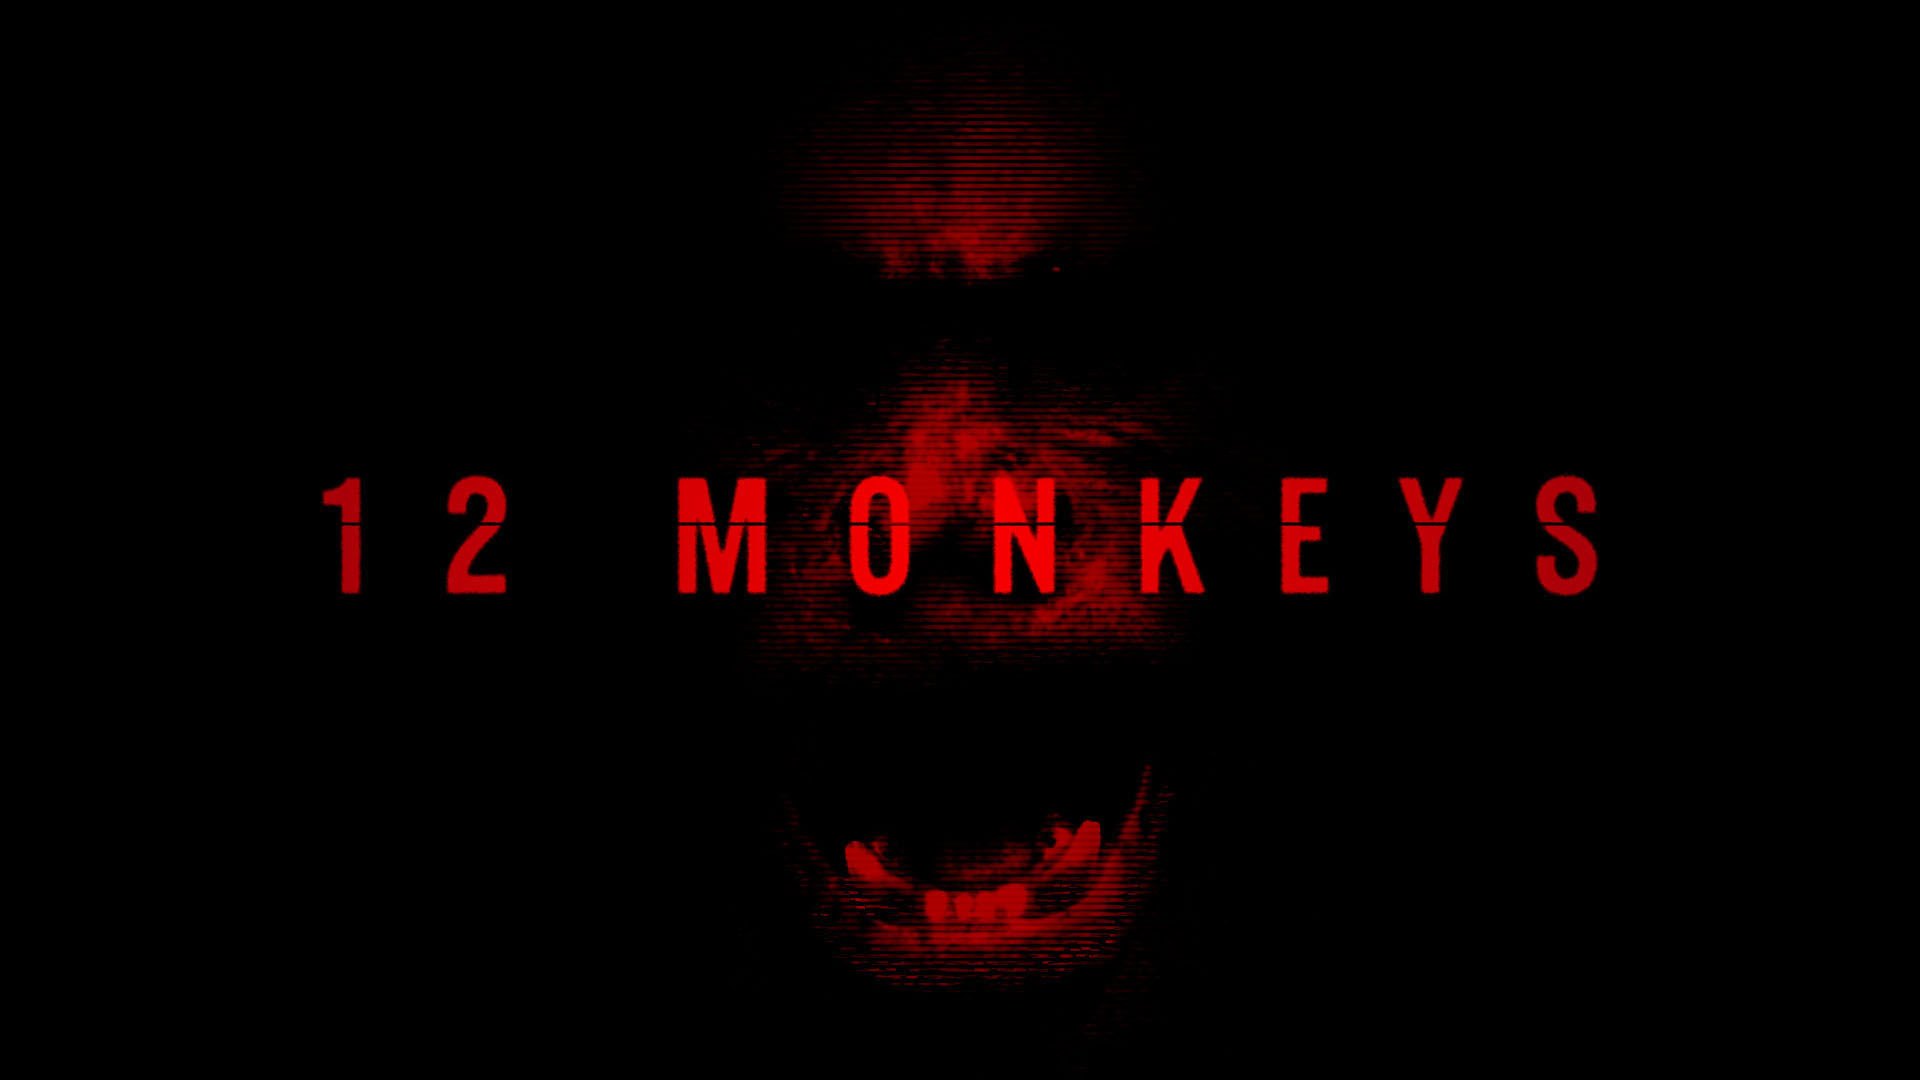 Amazing 12 Monkeys Pictures & Backgrounds